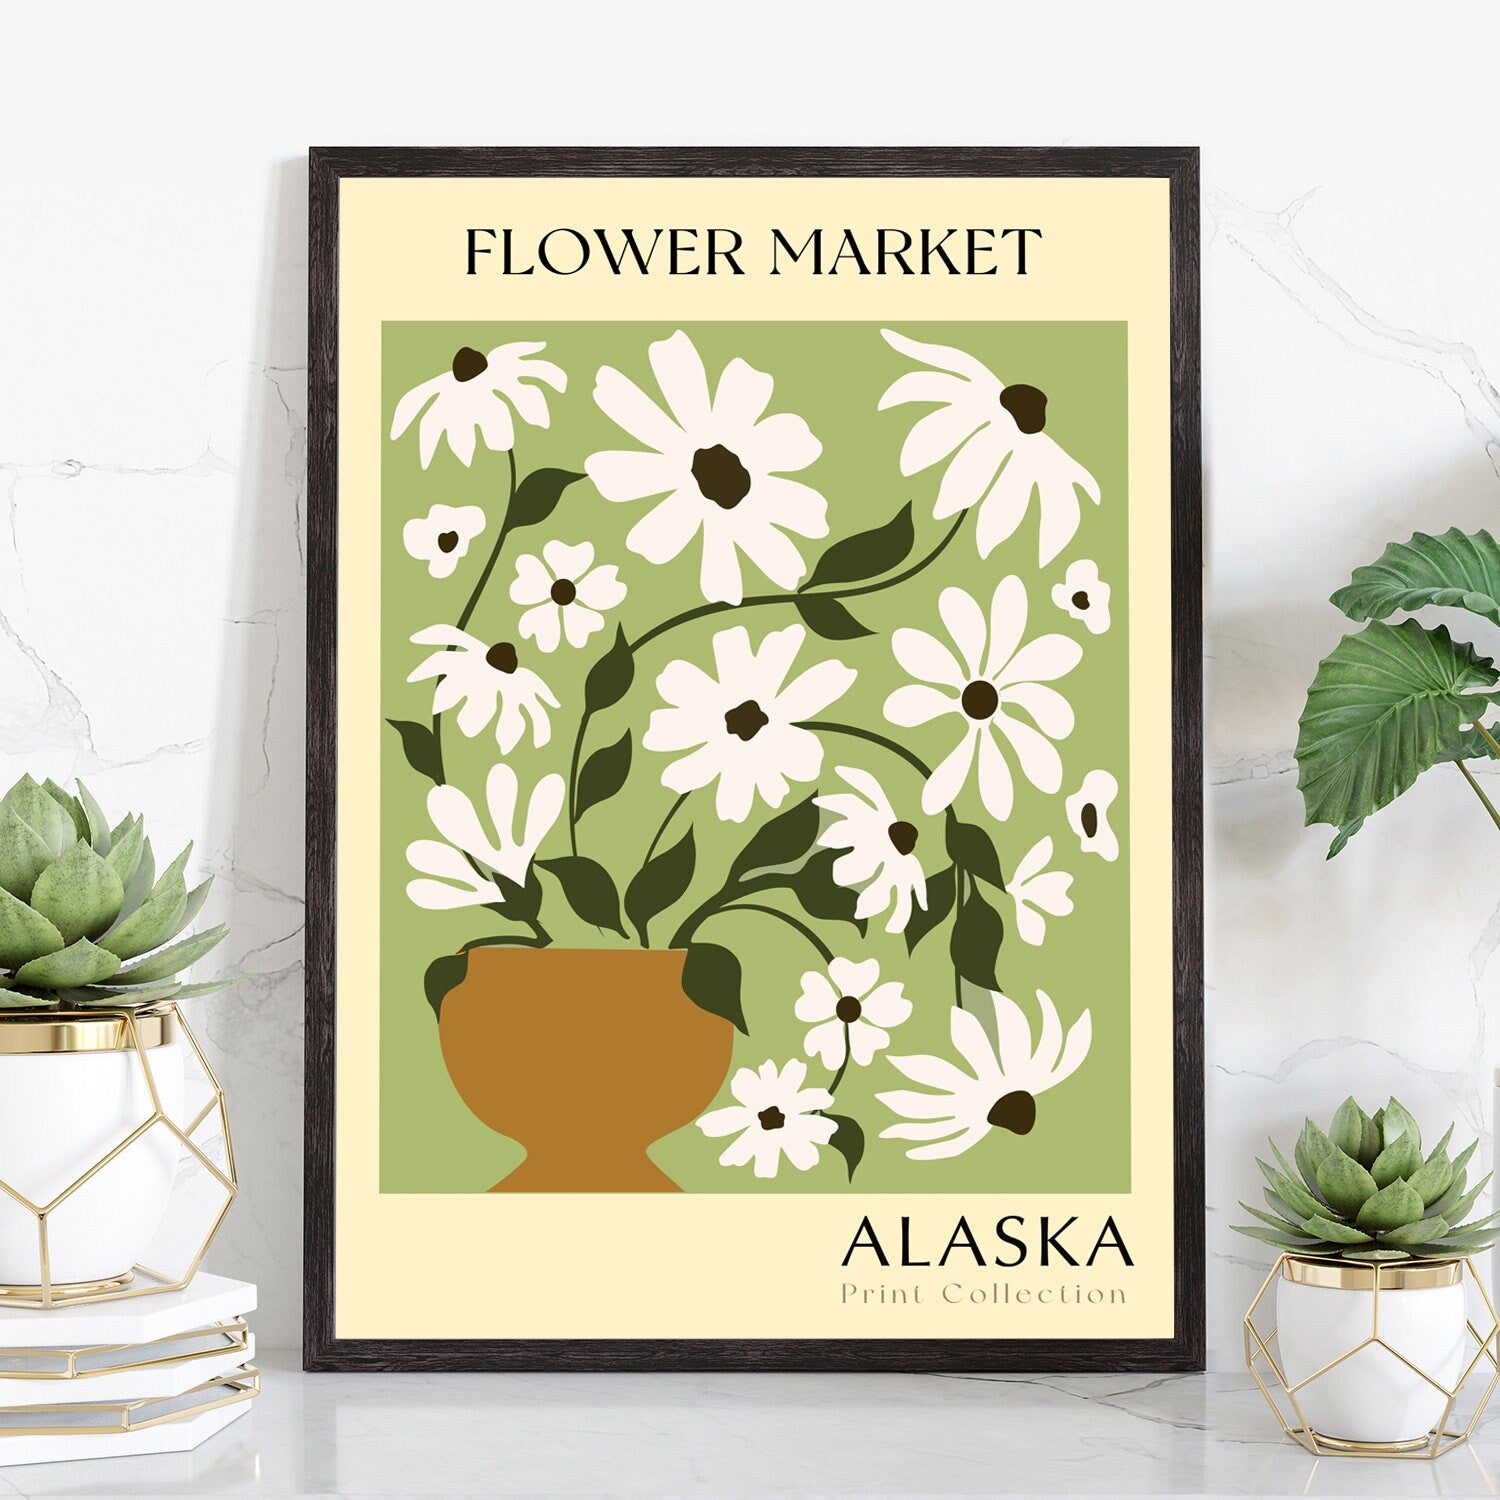 Alaska State flower print, USA states poster, Alaska flower market poster, Botanical posters, Natural poster artwork, Boho floral wall art